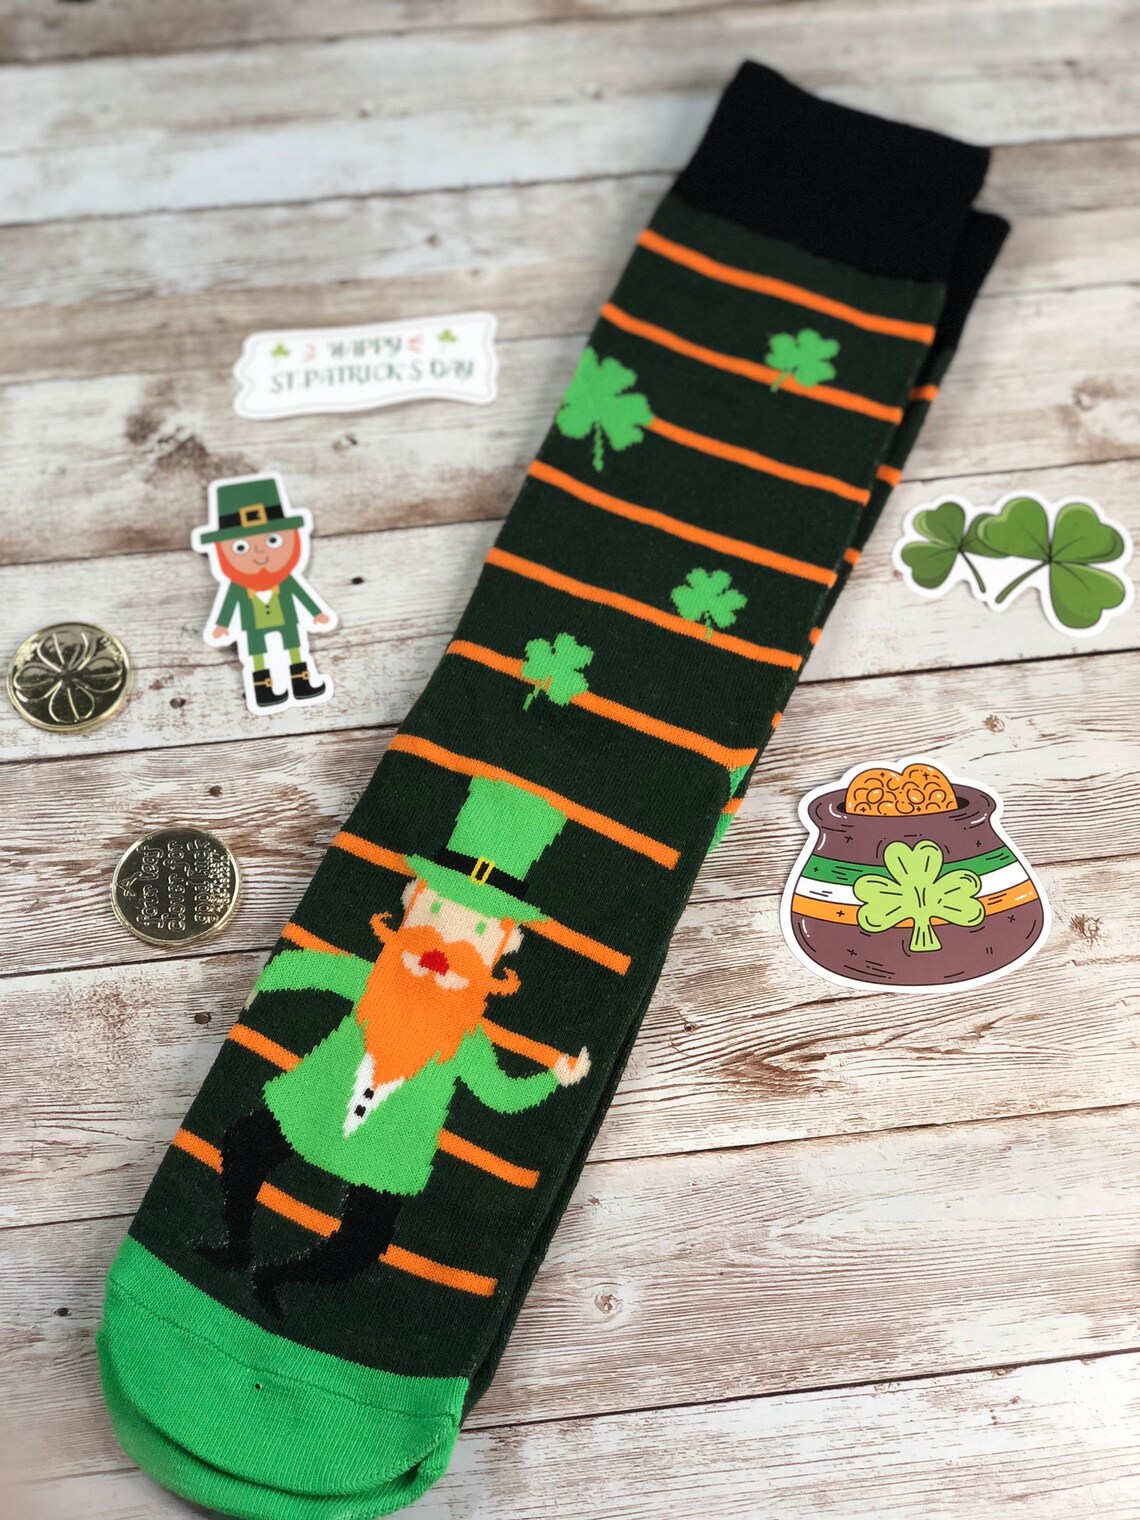 St. Patrick's Day socks Leprechaun socks party socks | Etsy